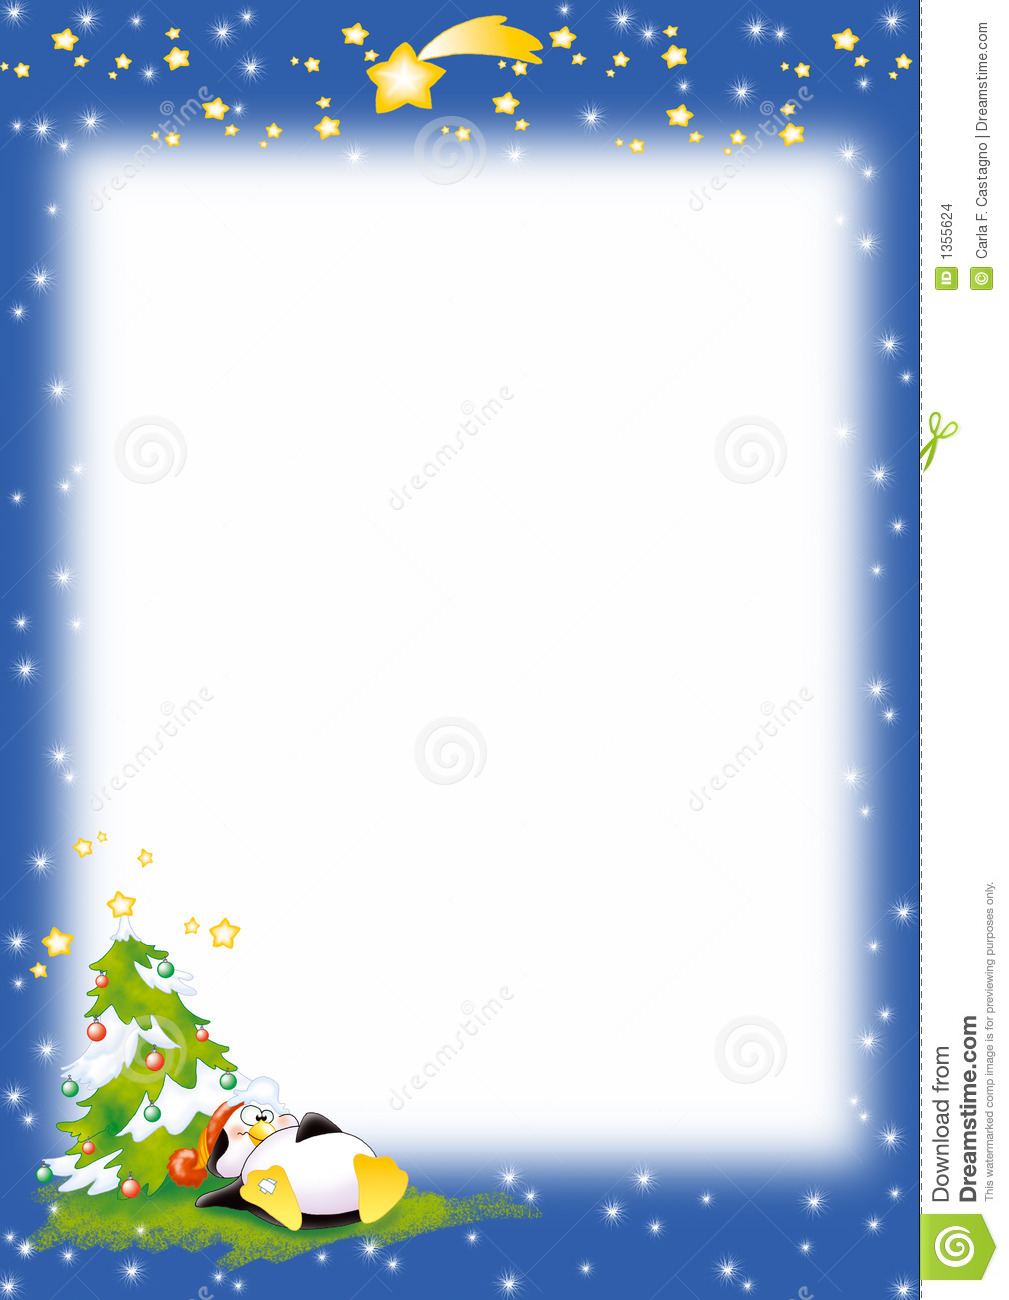 Christmas Letter Background Template Samples | Letter ...